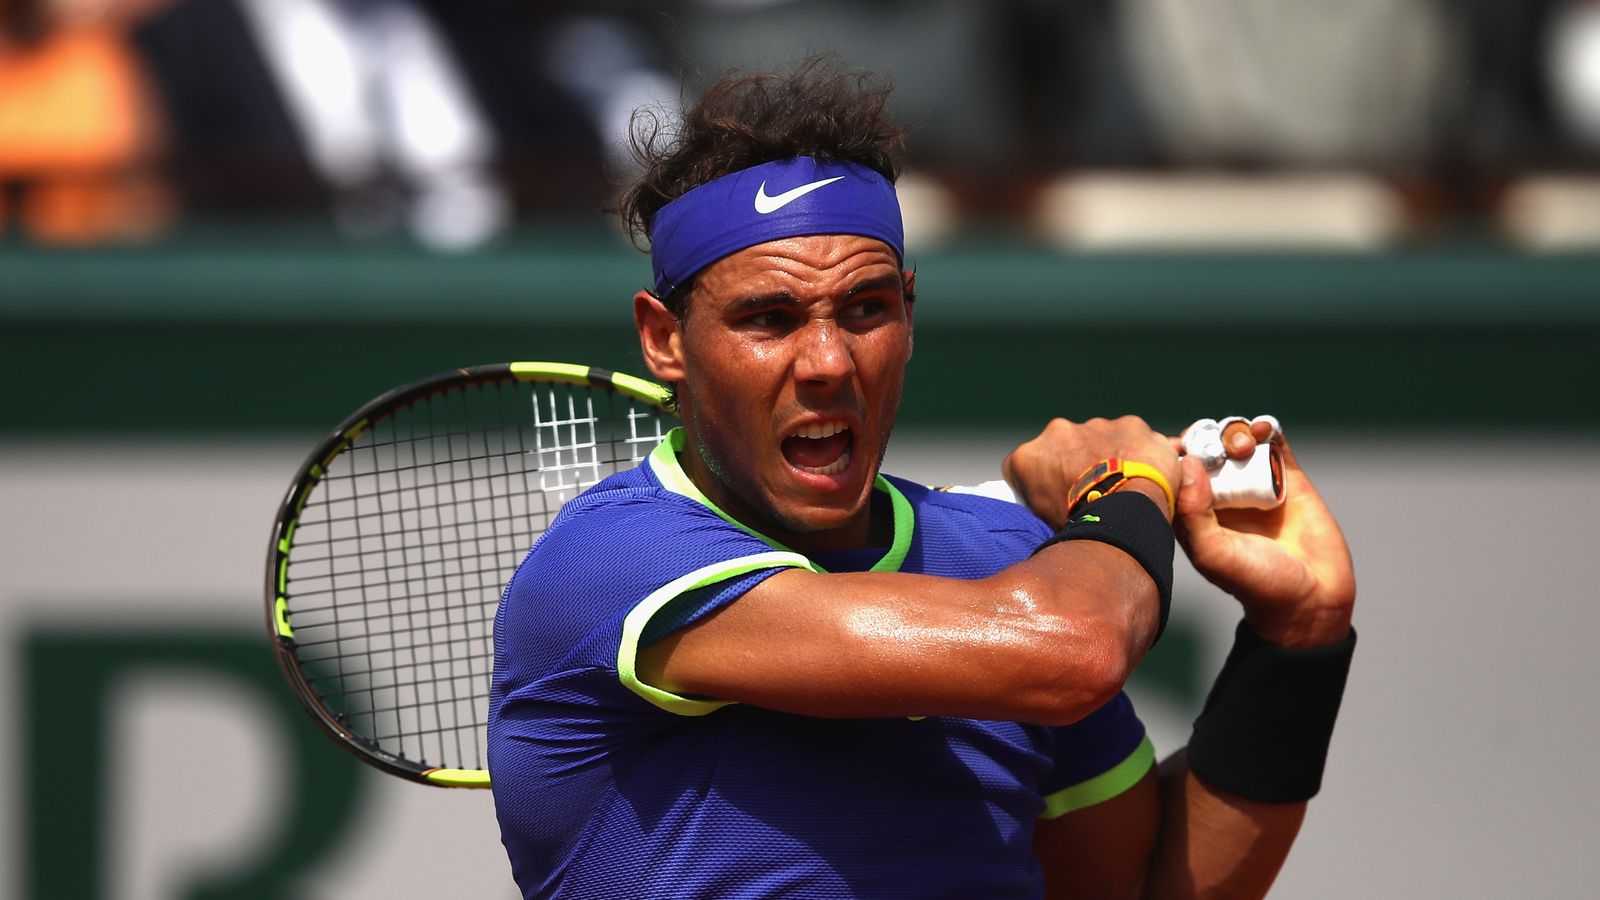 Rafa Nadal already qualified for ATP World Tour Finals | Tennis News | Sky Sports